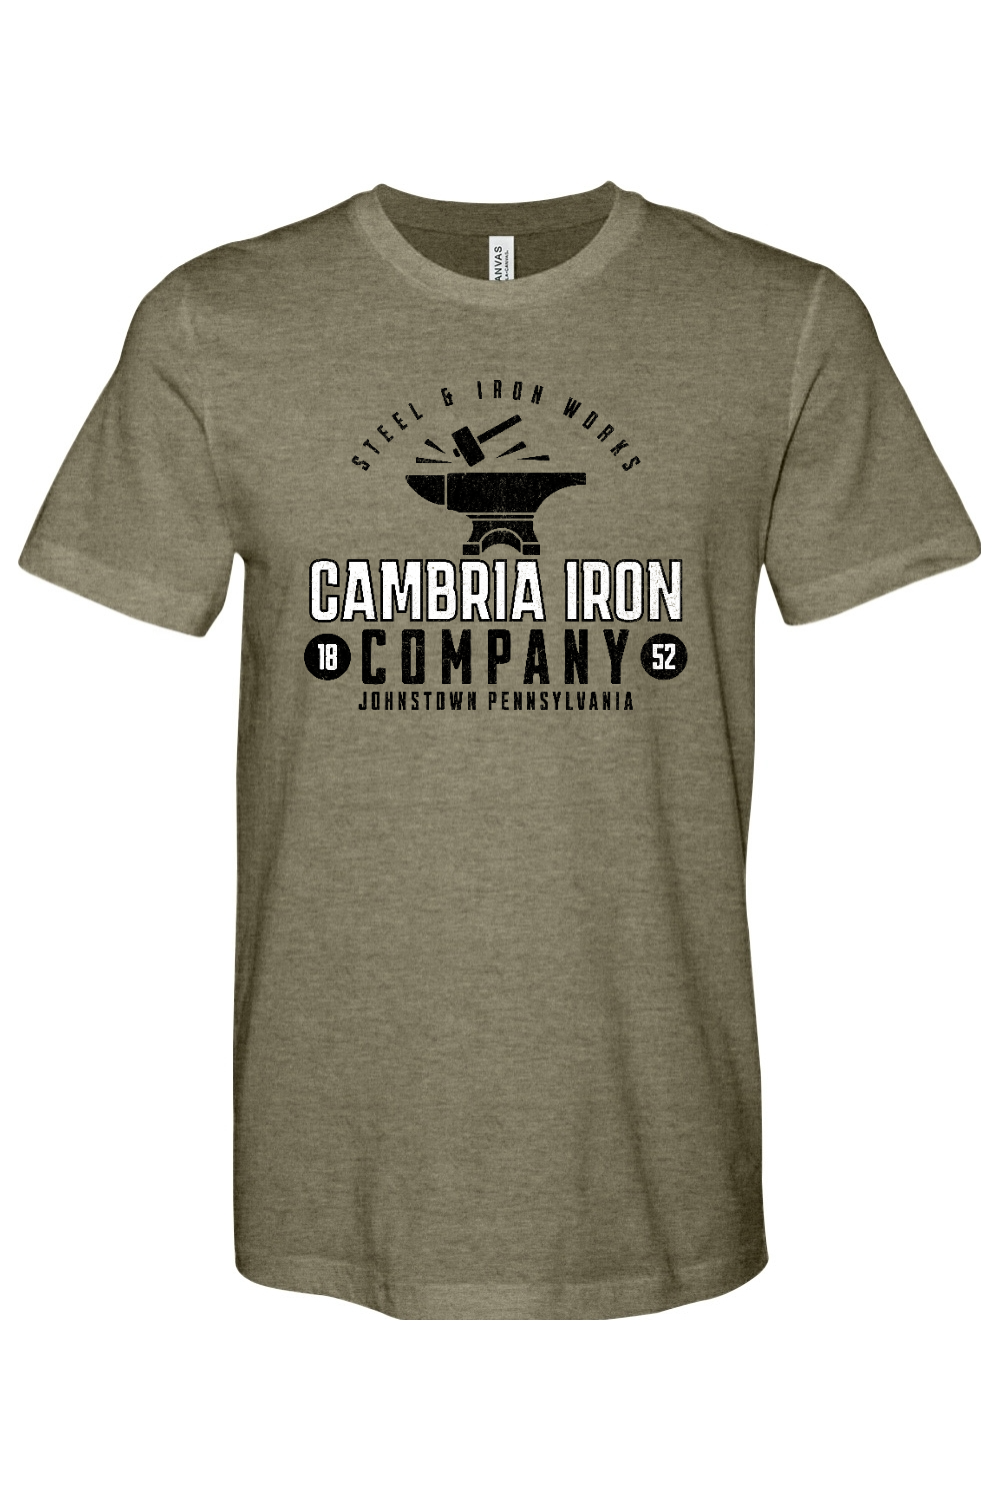 Cambria Iron Company - Johnstown, PA - Yinzylvania